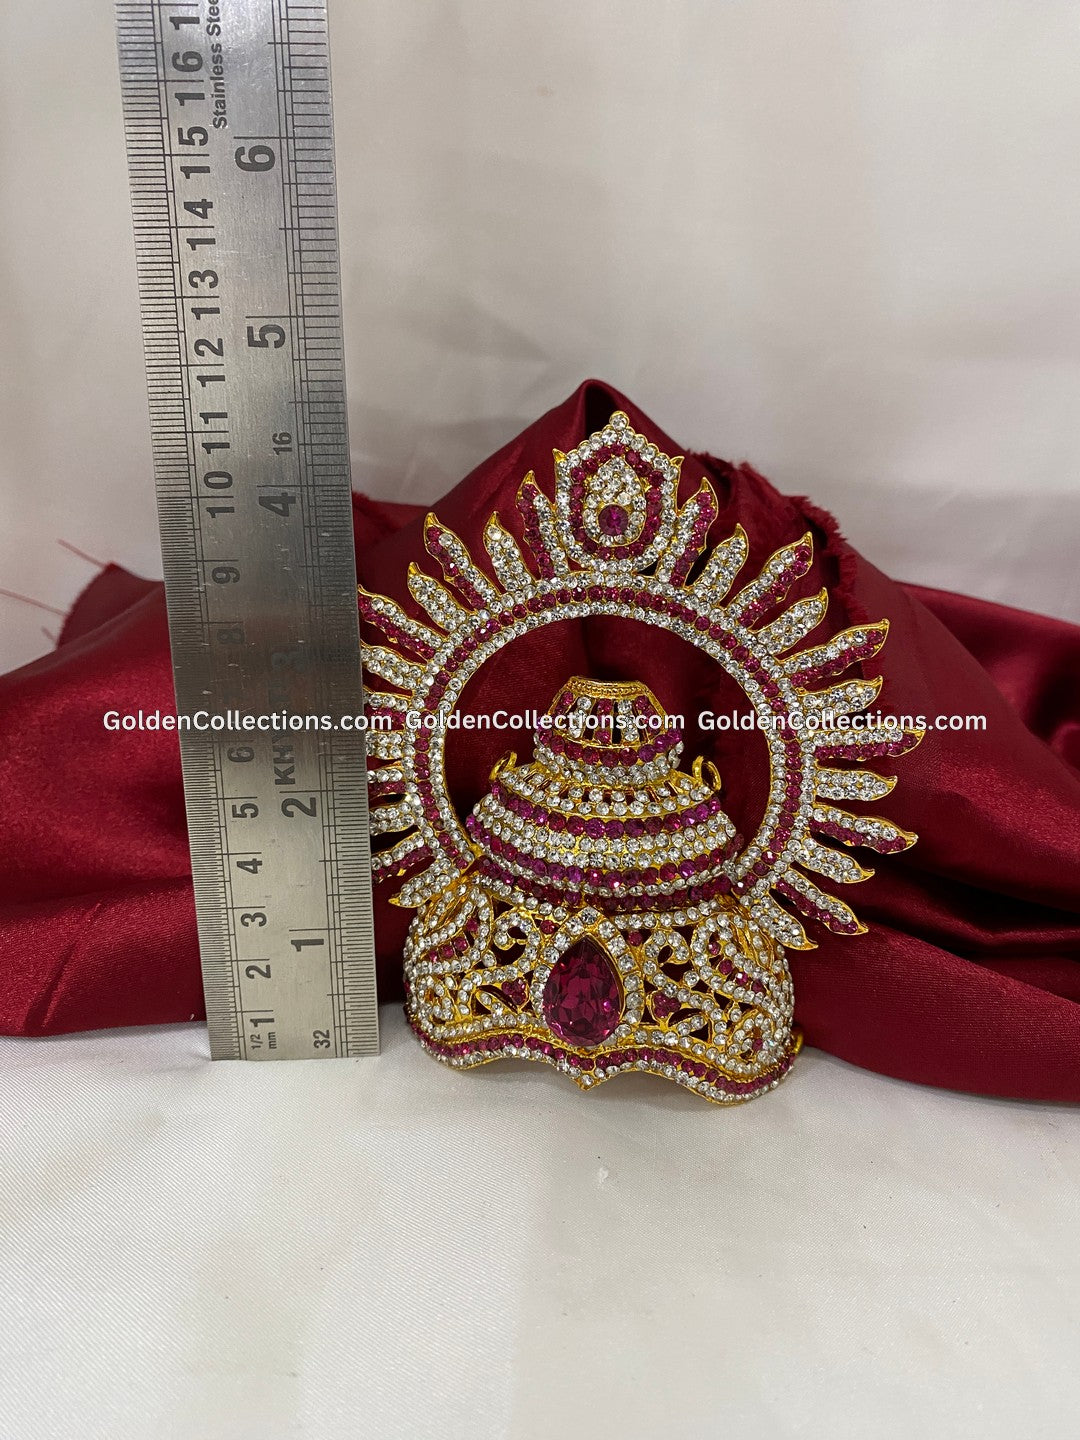 Divine Mukut Kireedam for Hindu Deity - GoldenCollections DGC-138 2